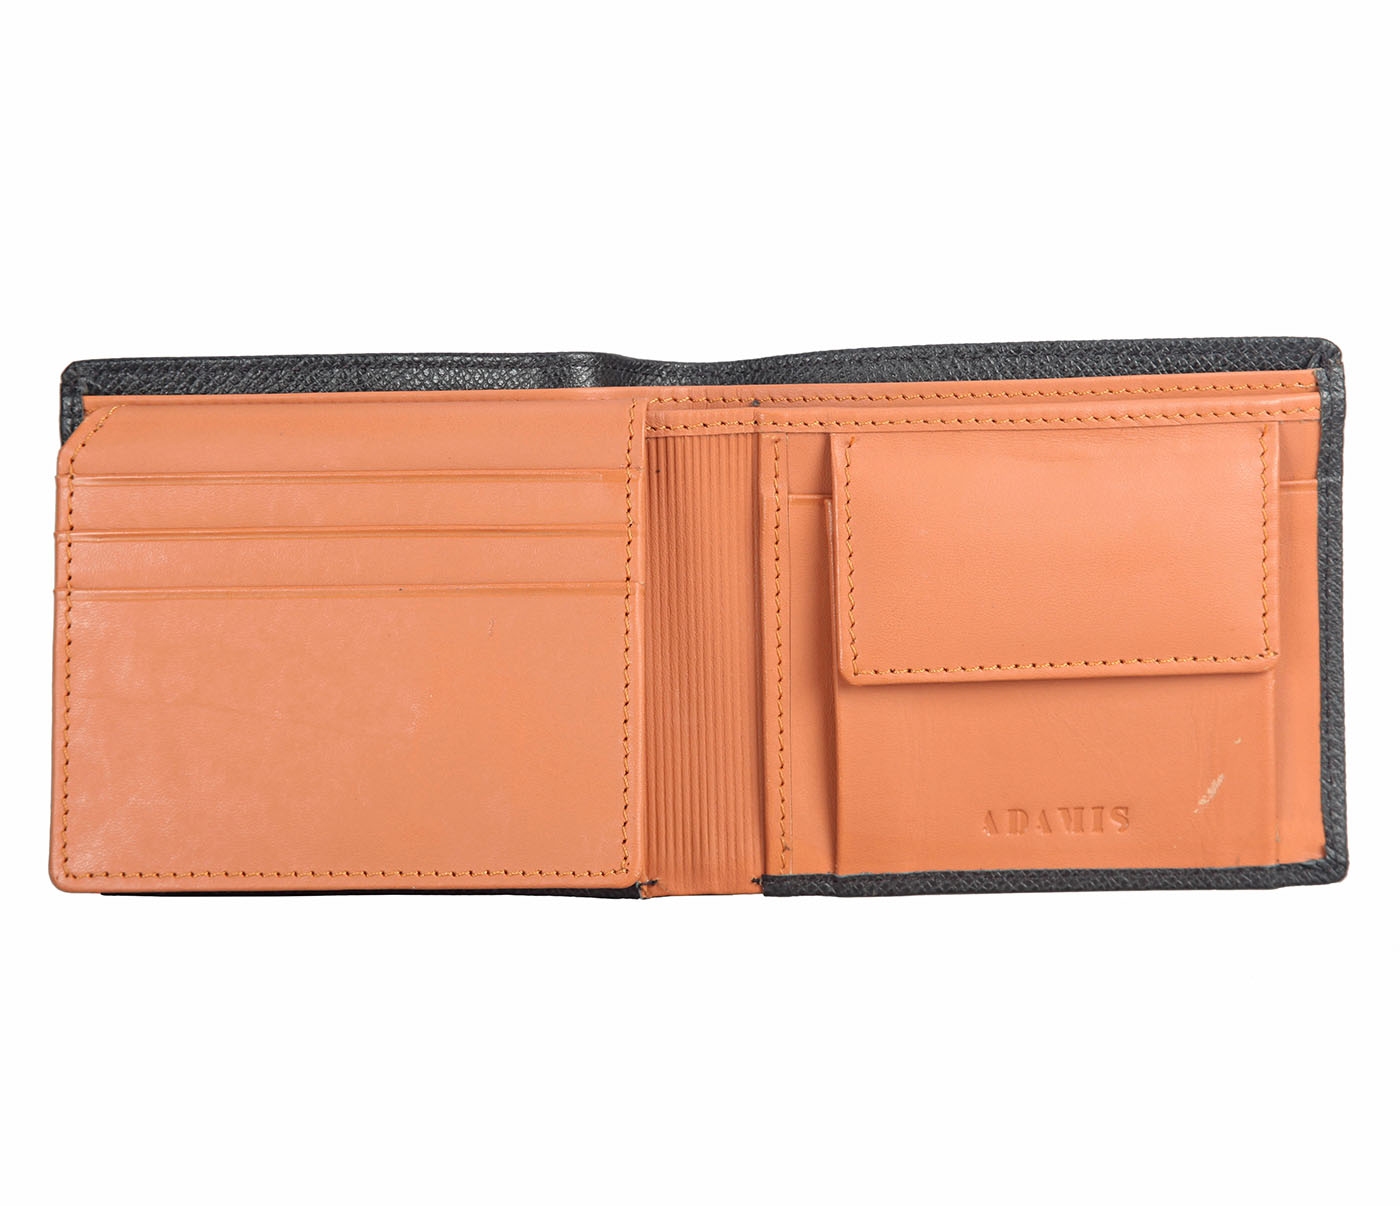 W310-Addler-Men's bifold wallet with coin pocket in Genuine Leather - Black